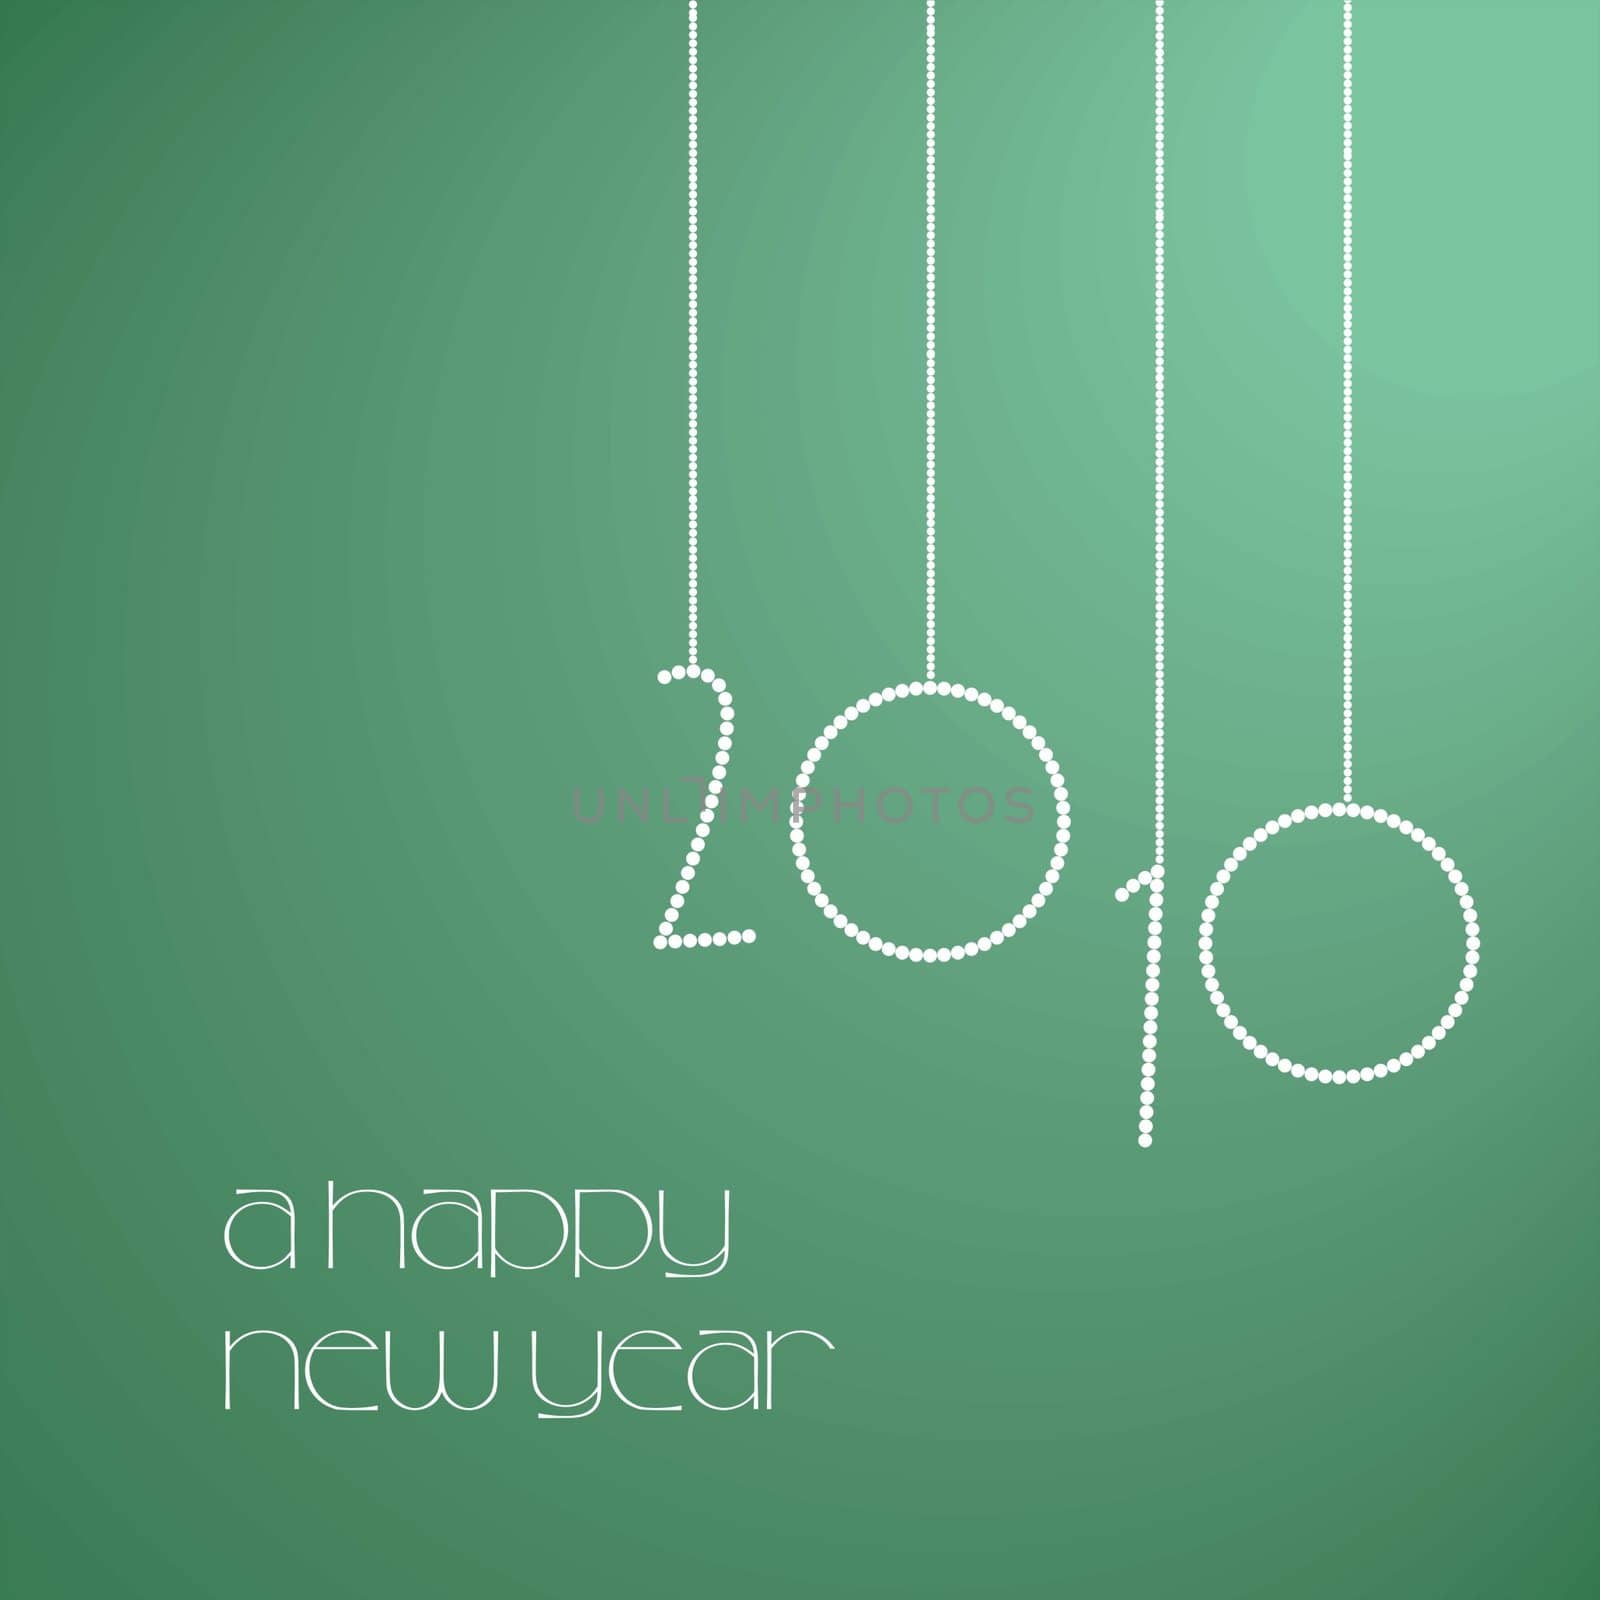 Happy New Year - green vector illustration